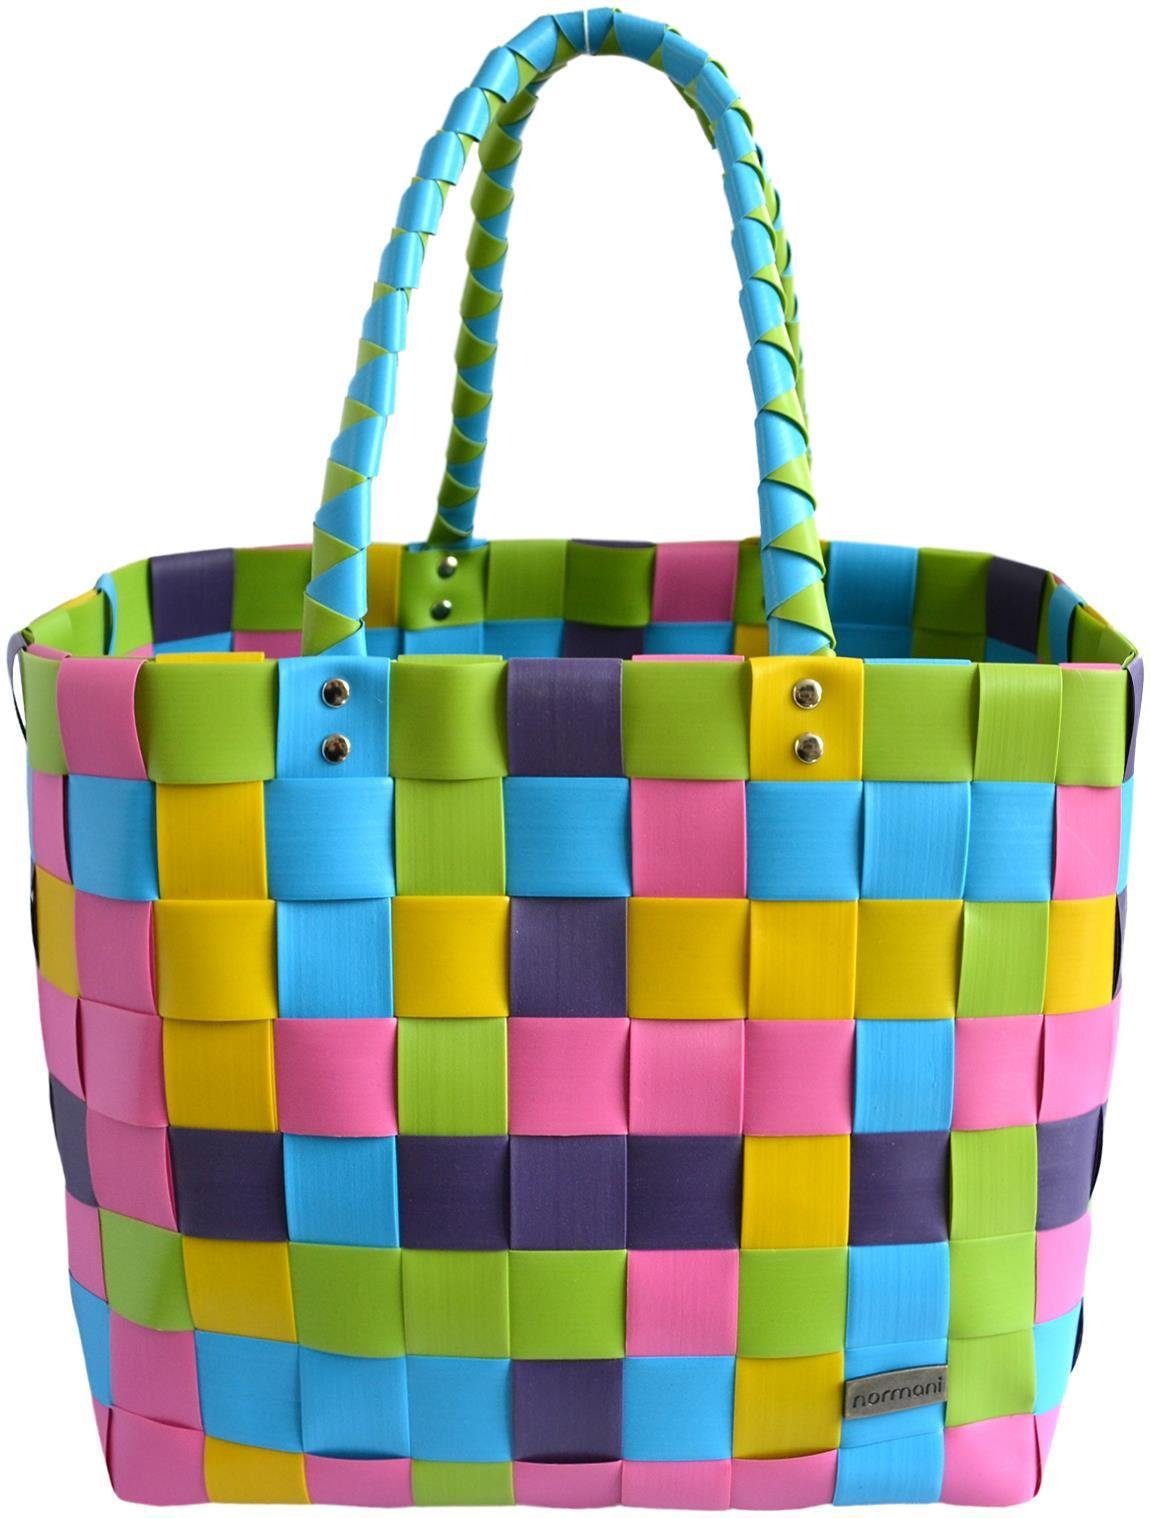 normani Einkaufskorb Einkaufskorb Einkaufstasche aus Kunststoff, 20 l, Flechtkorb aus pflegeleichtem Material Lolly Pop